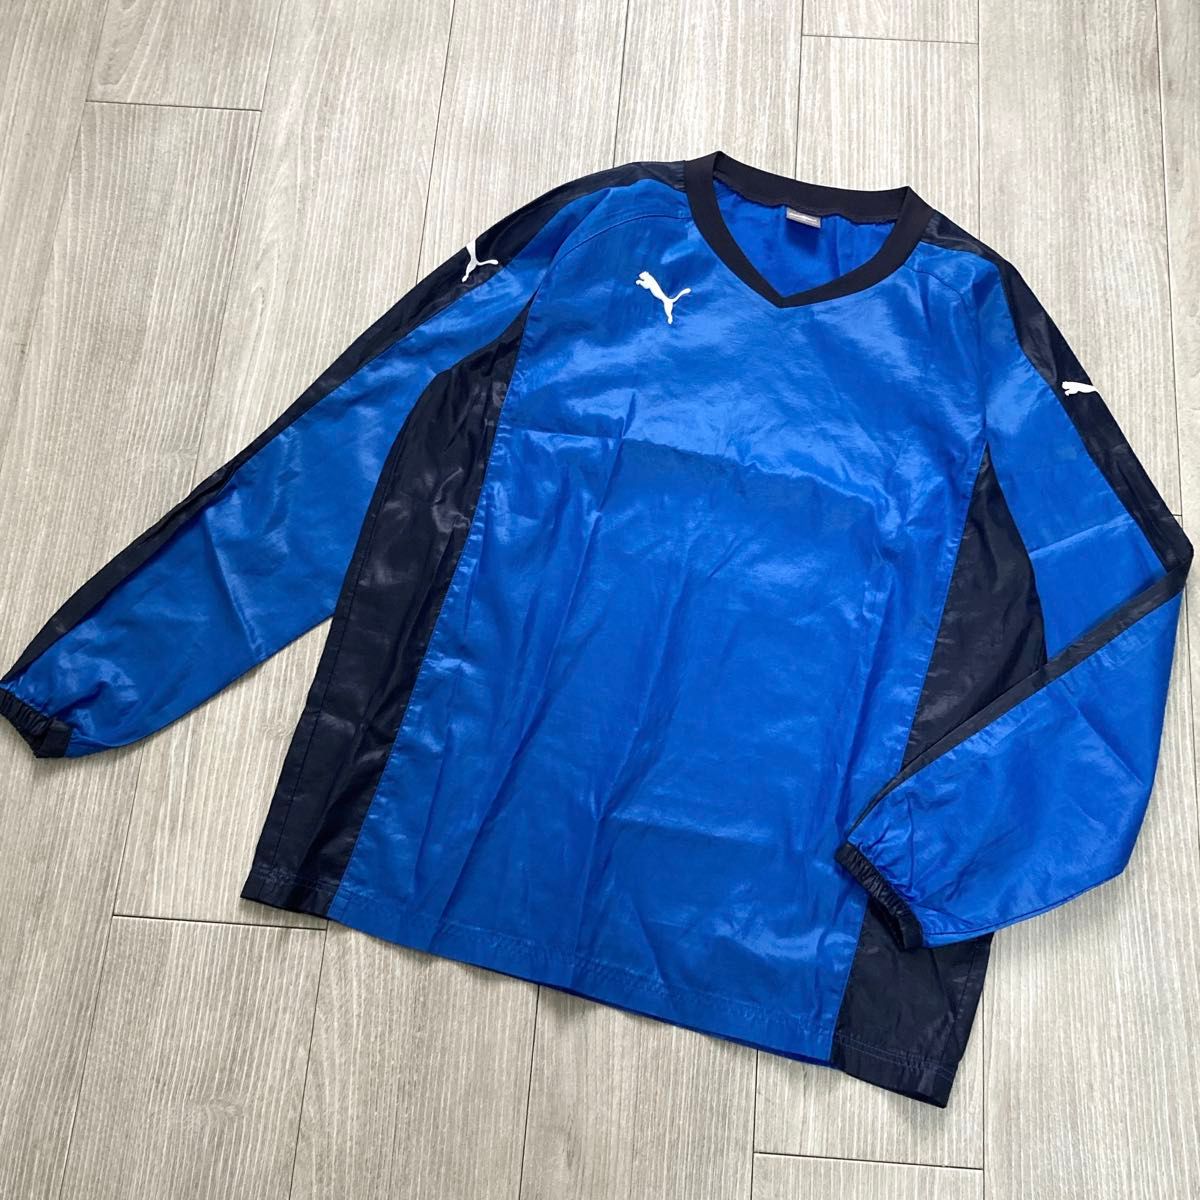 PUMA プーマ キッズ スポーツウェア 160 長袖 プルオーバー 刺繍ロゴ ブルー系 (p027) 